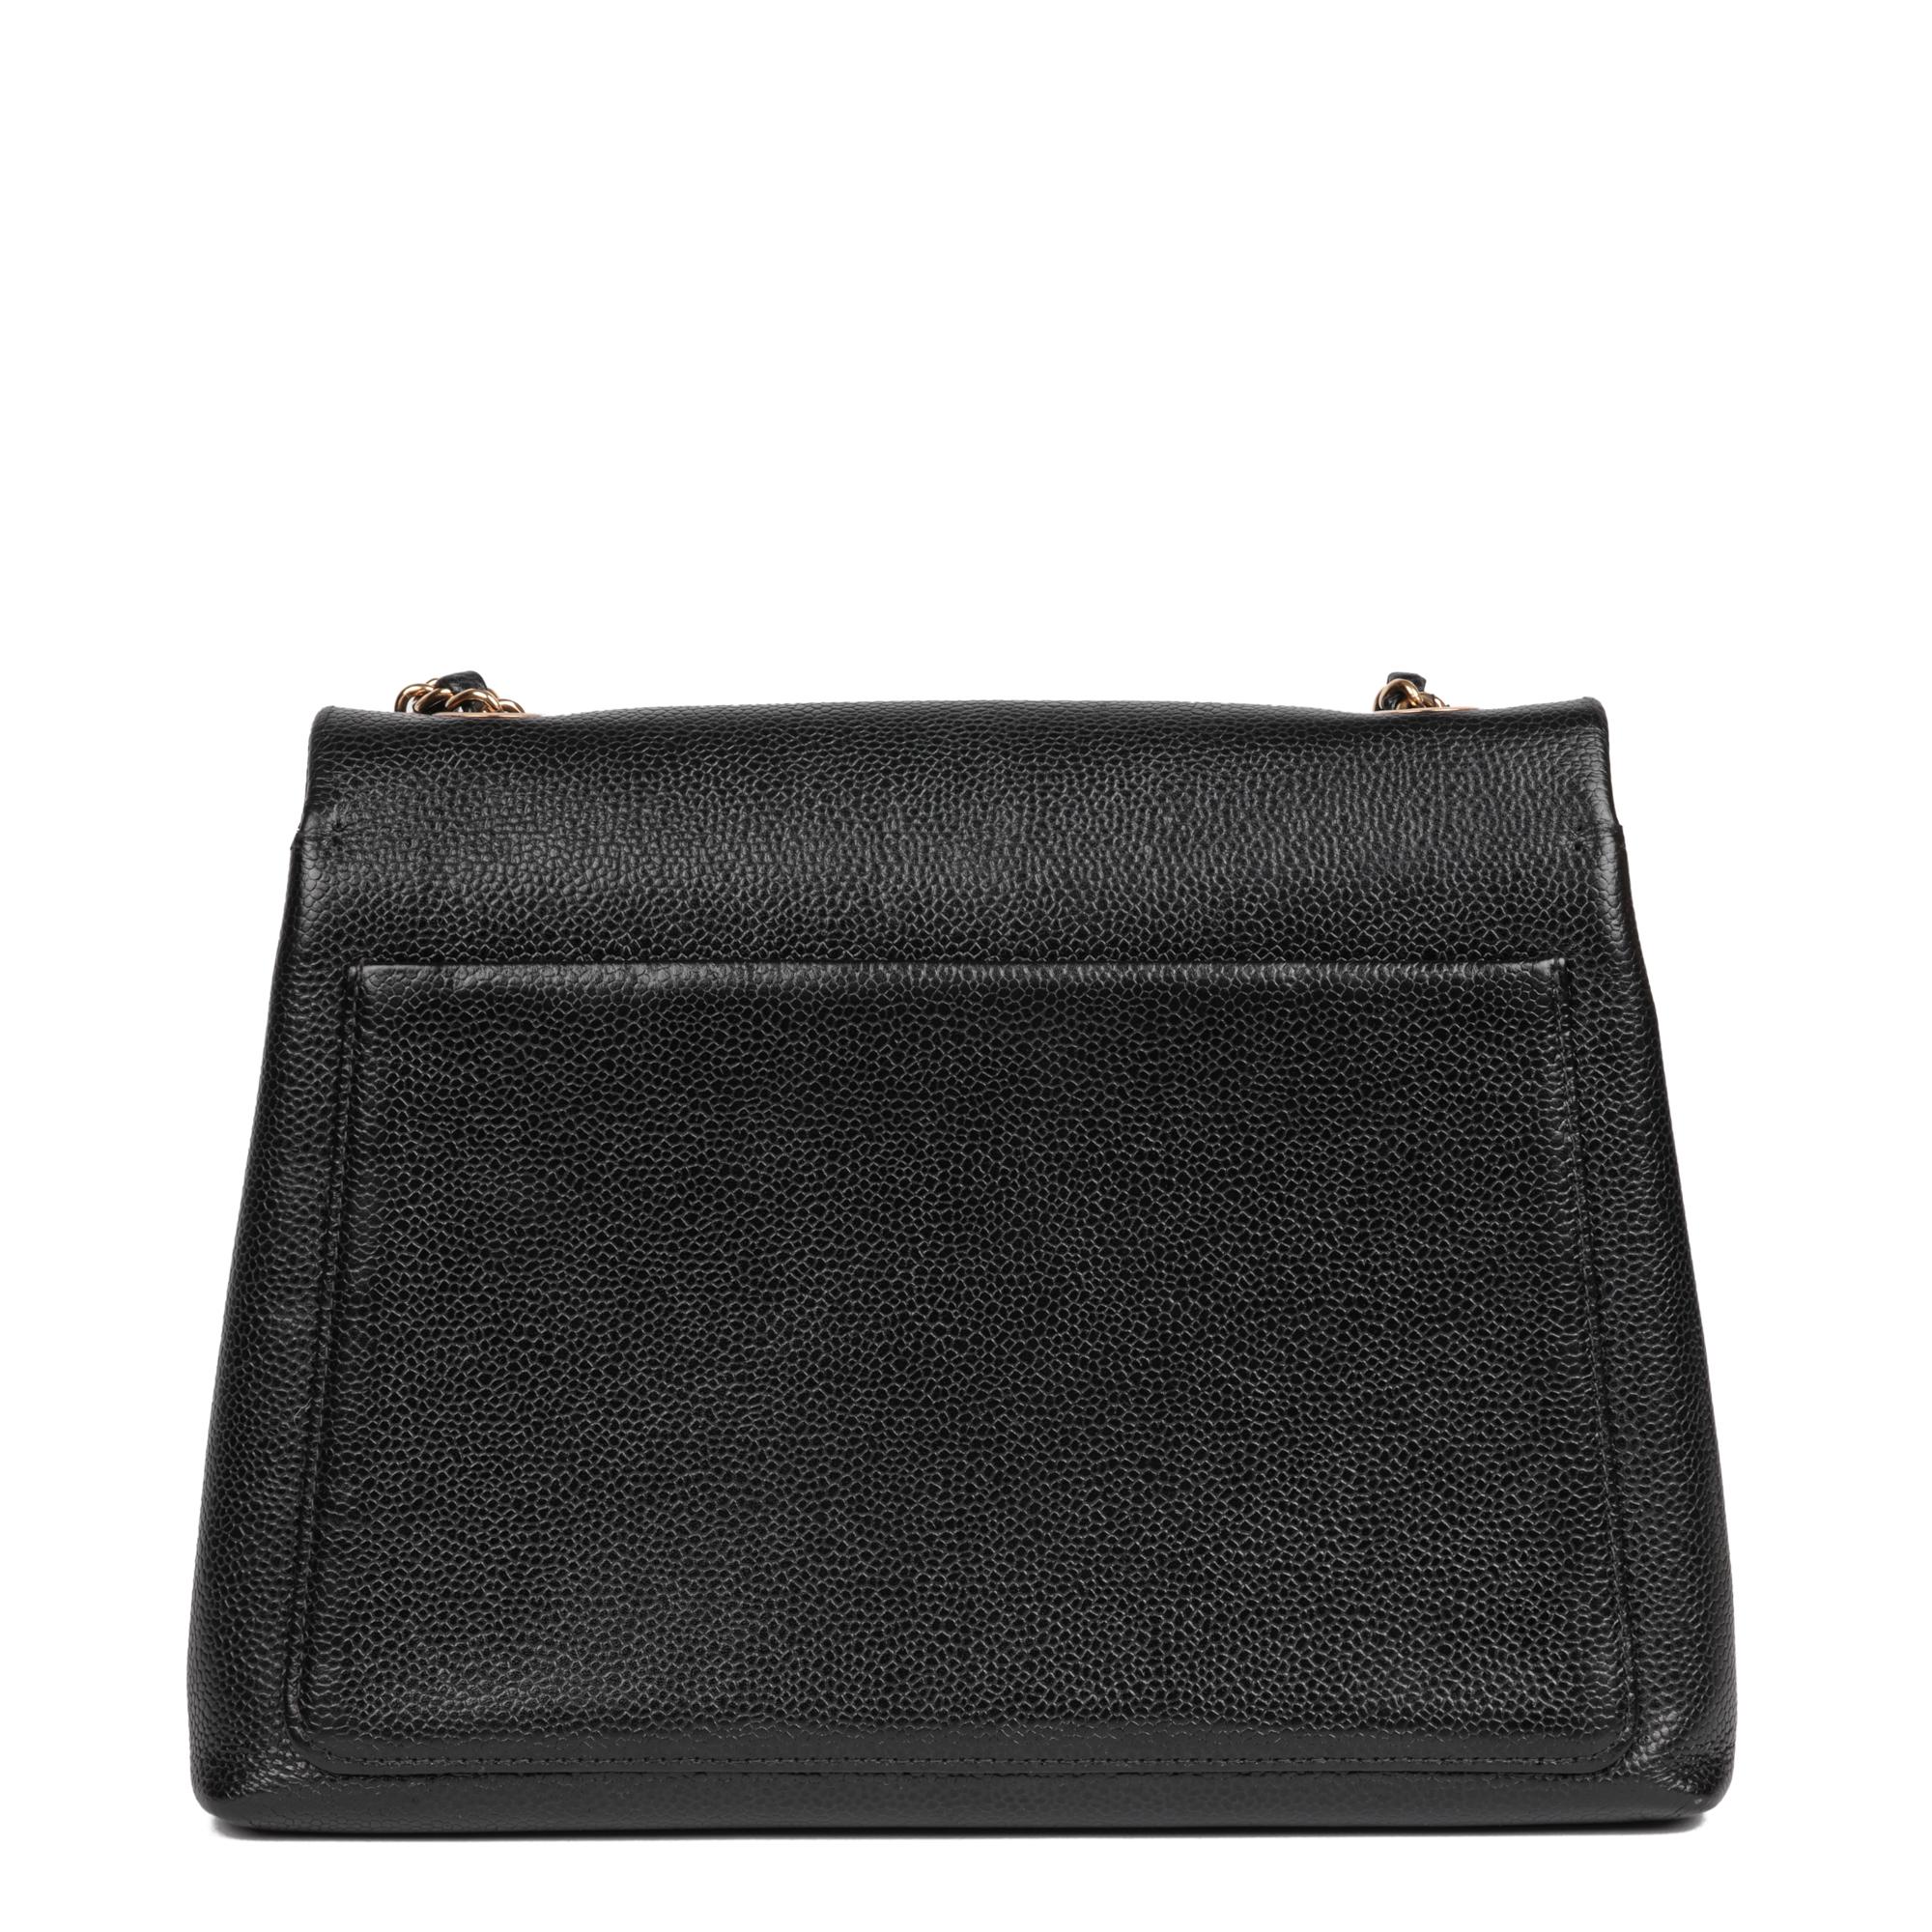 CHANEL Black Caviar Leather Vintage Medium Classic Single Flap Bag For Sale 1